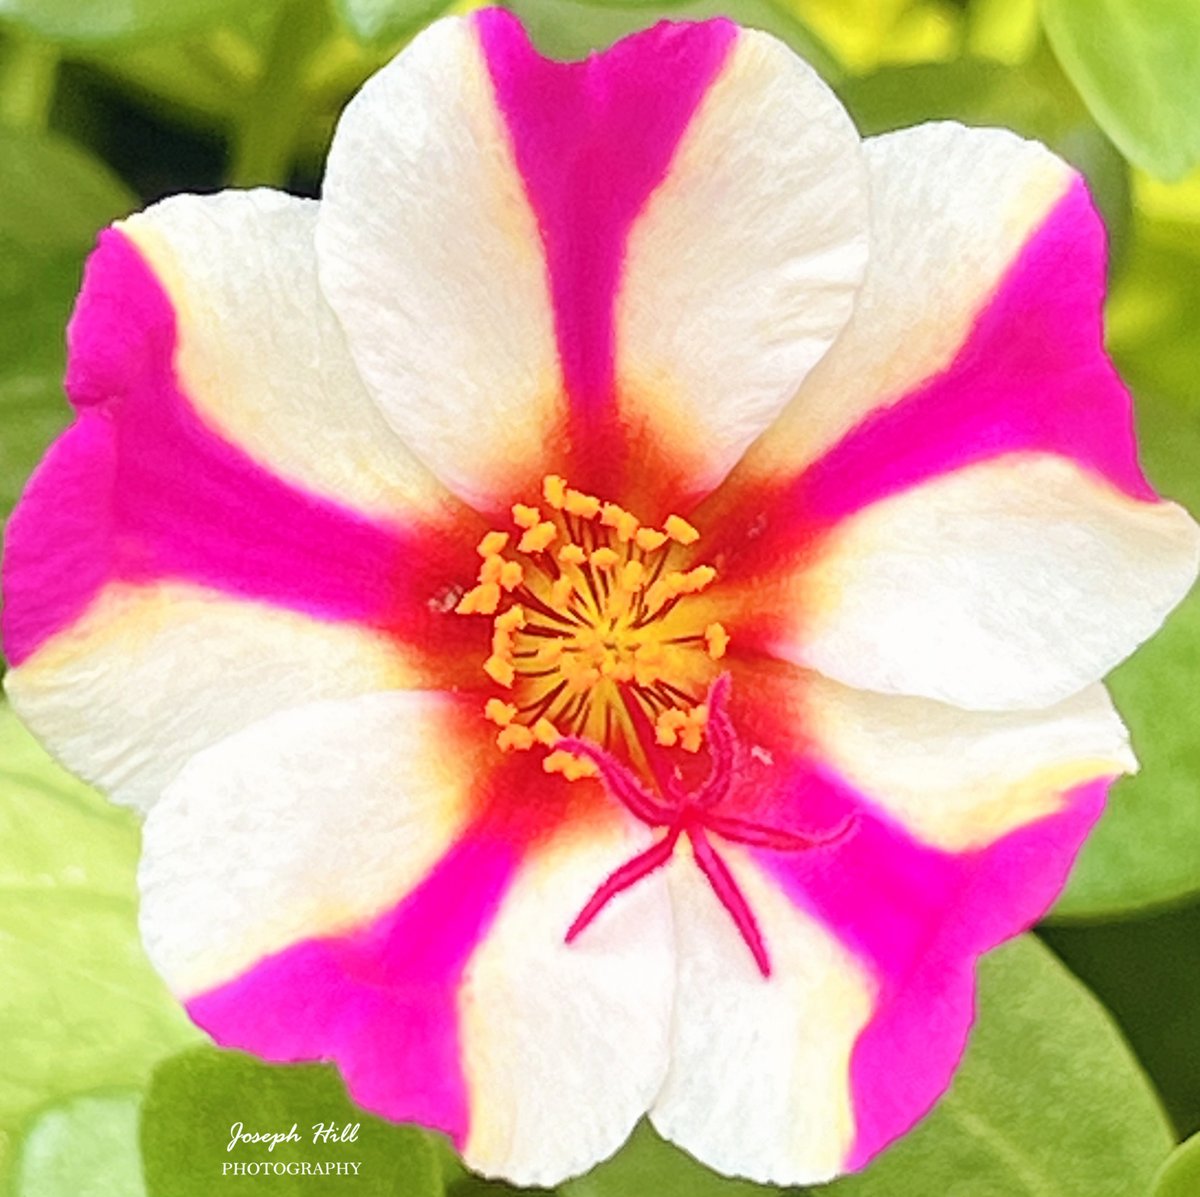 Portuluca🌸 Photo By: Joseph Hill🙂📸🌸 #Portuluca🌸 #flower #nature #closeup #beautiful #colorful #Peaceful #spring #daylight #flowerphotography #NaturePhotography #SouthernPinesNC #May